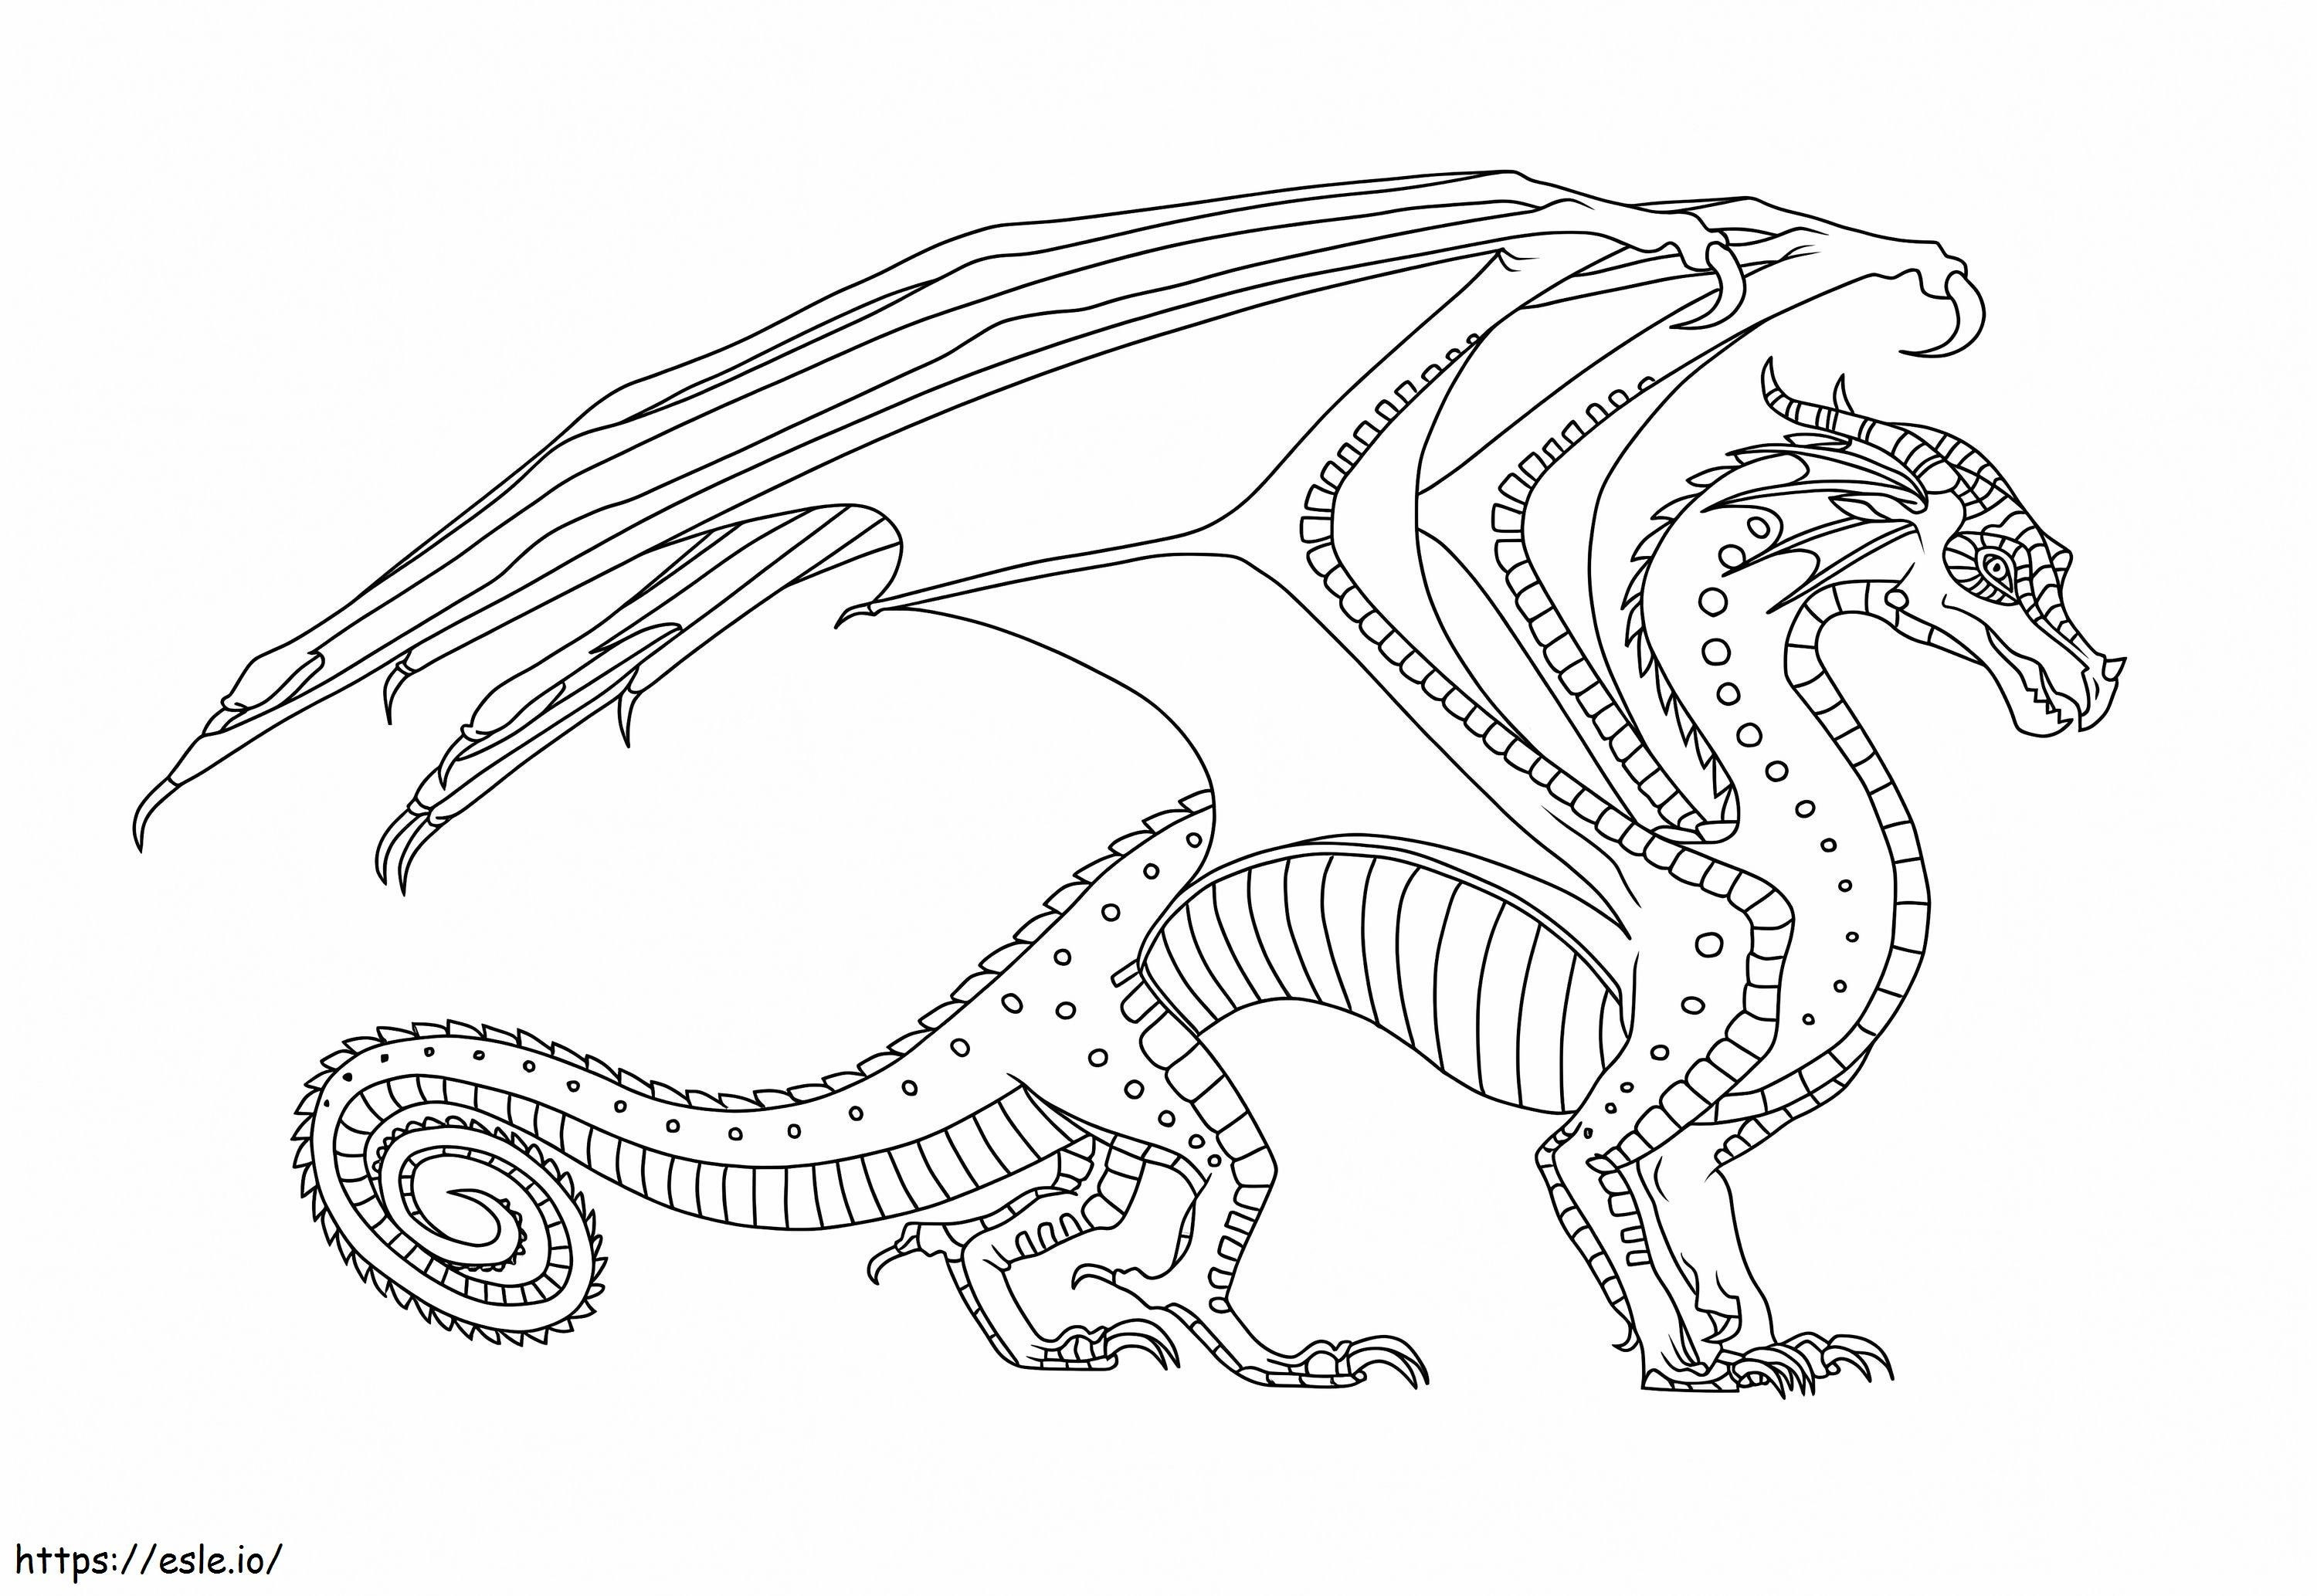 Basic Dragon coloring page